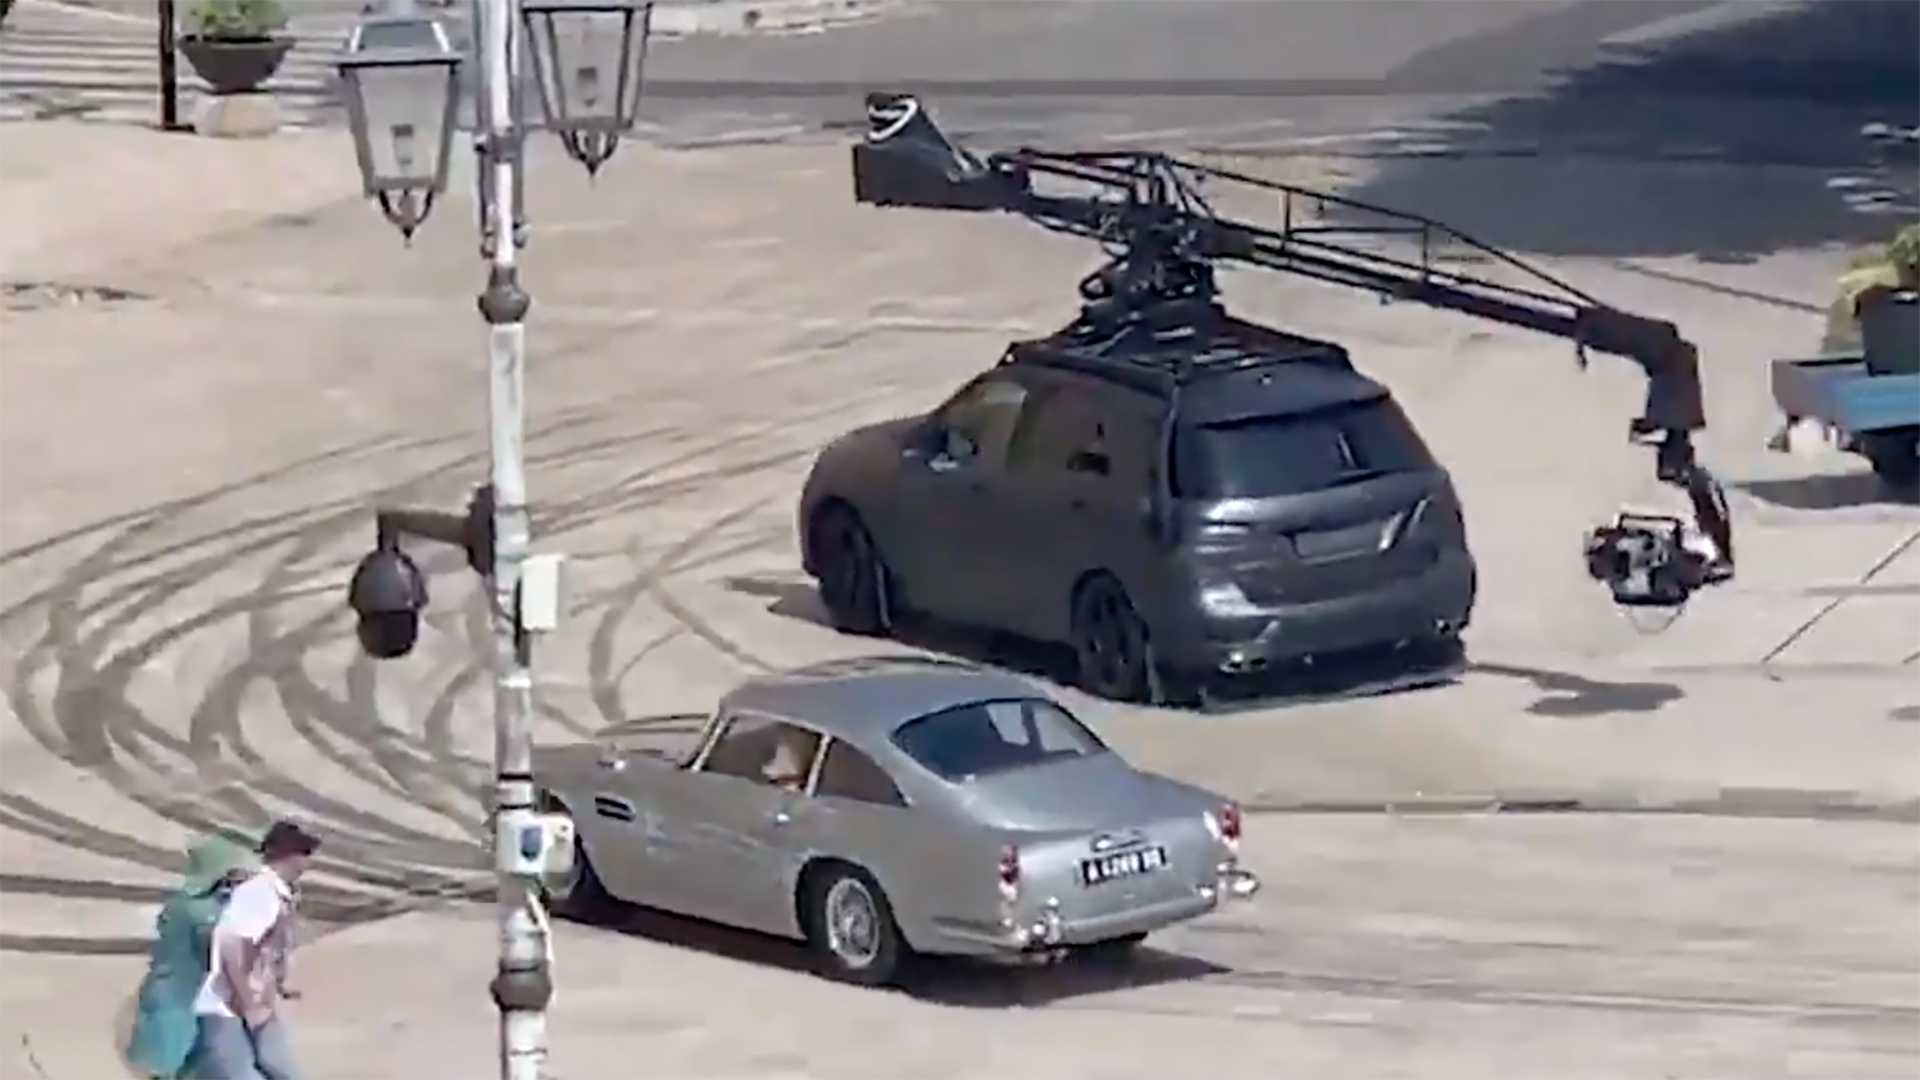 Sinister Mercedes GLE Camera Car Seen Chasing DB5 On 007 Film Set